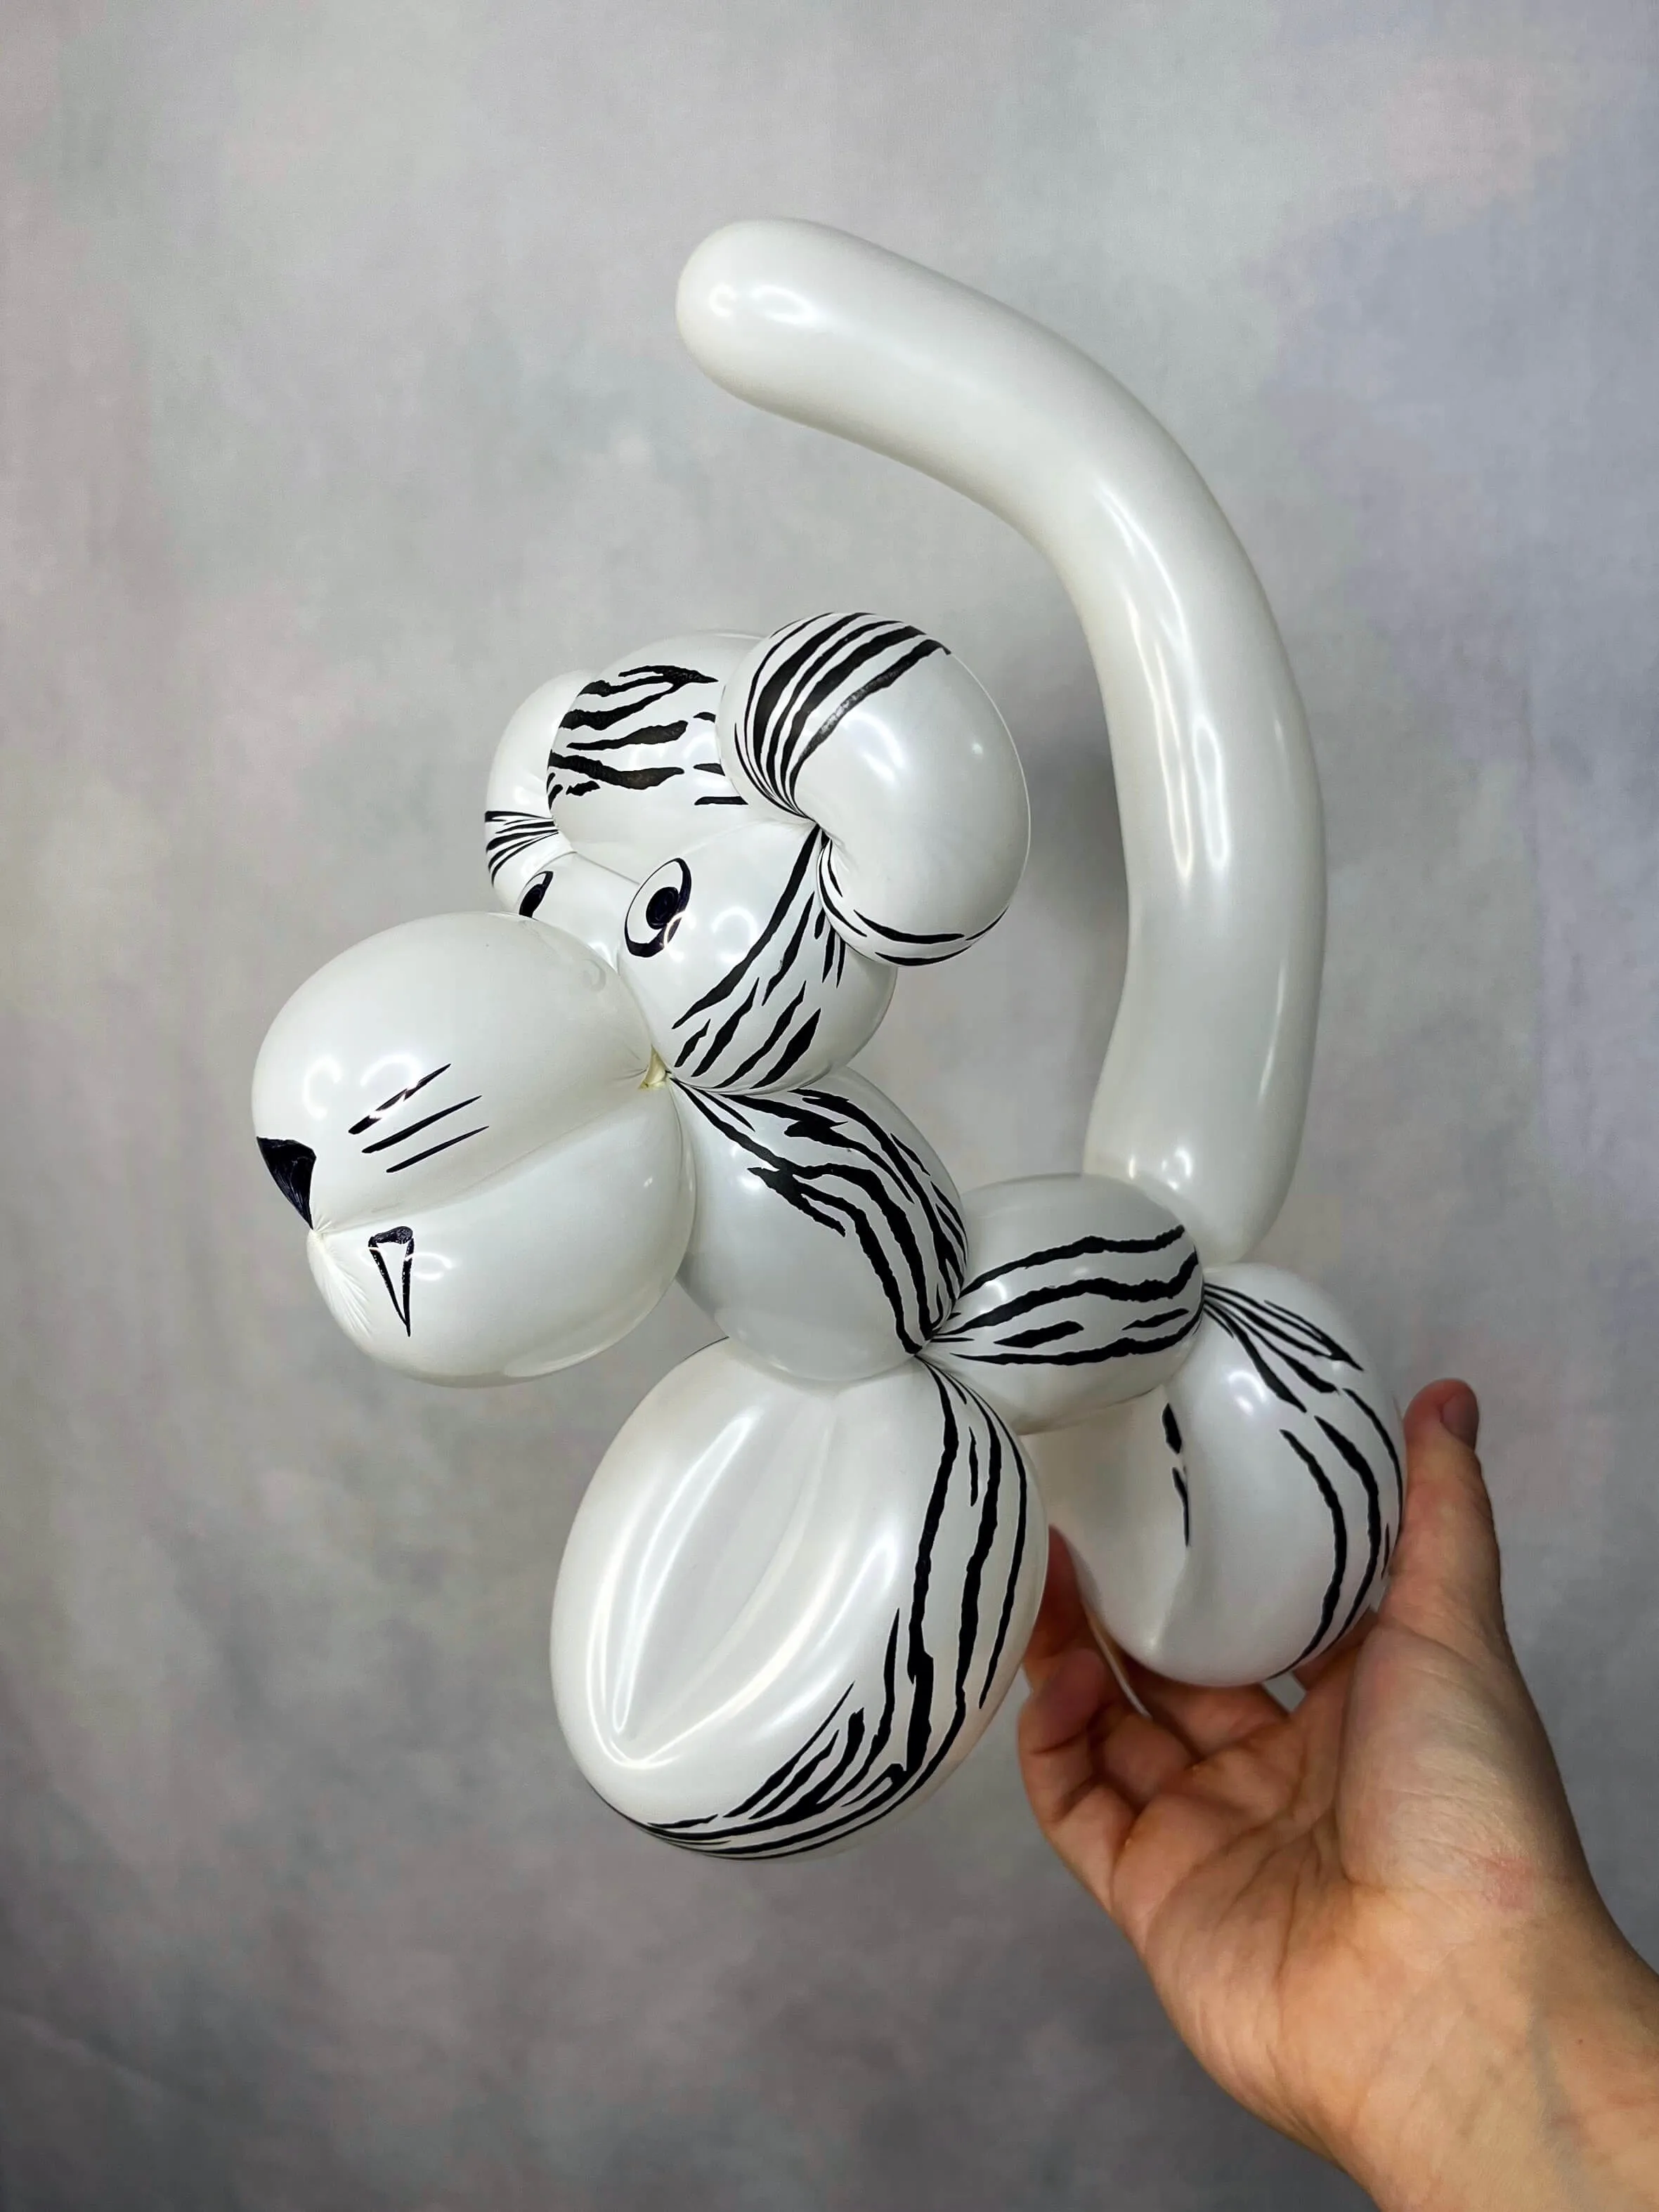 Balloon sculpture of a white tiger